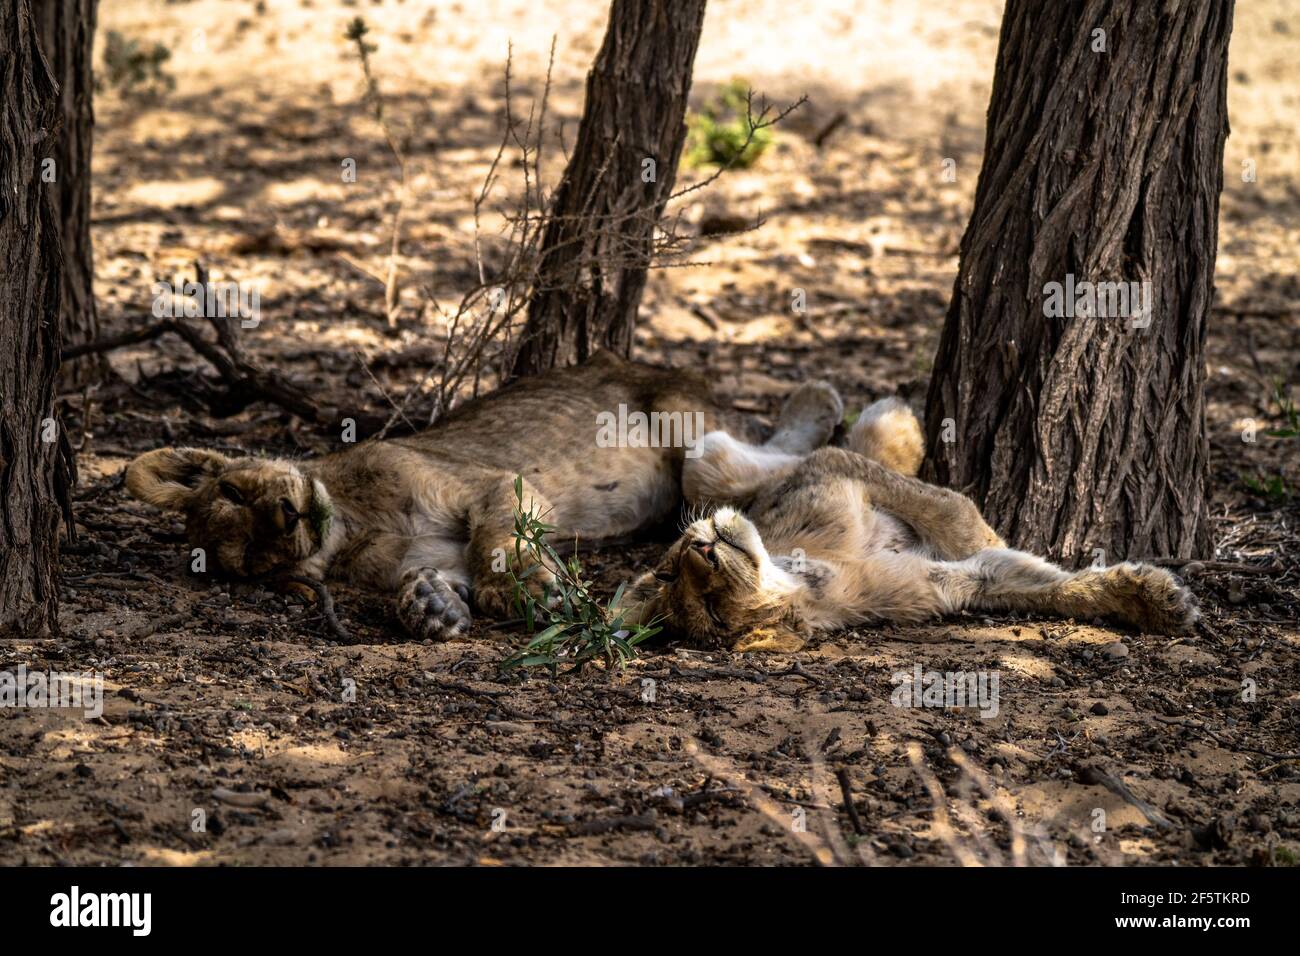 Deux petits lions dormant à l'ombre d'un arbre Banque D'Images